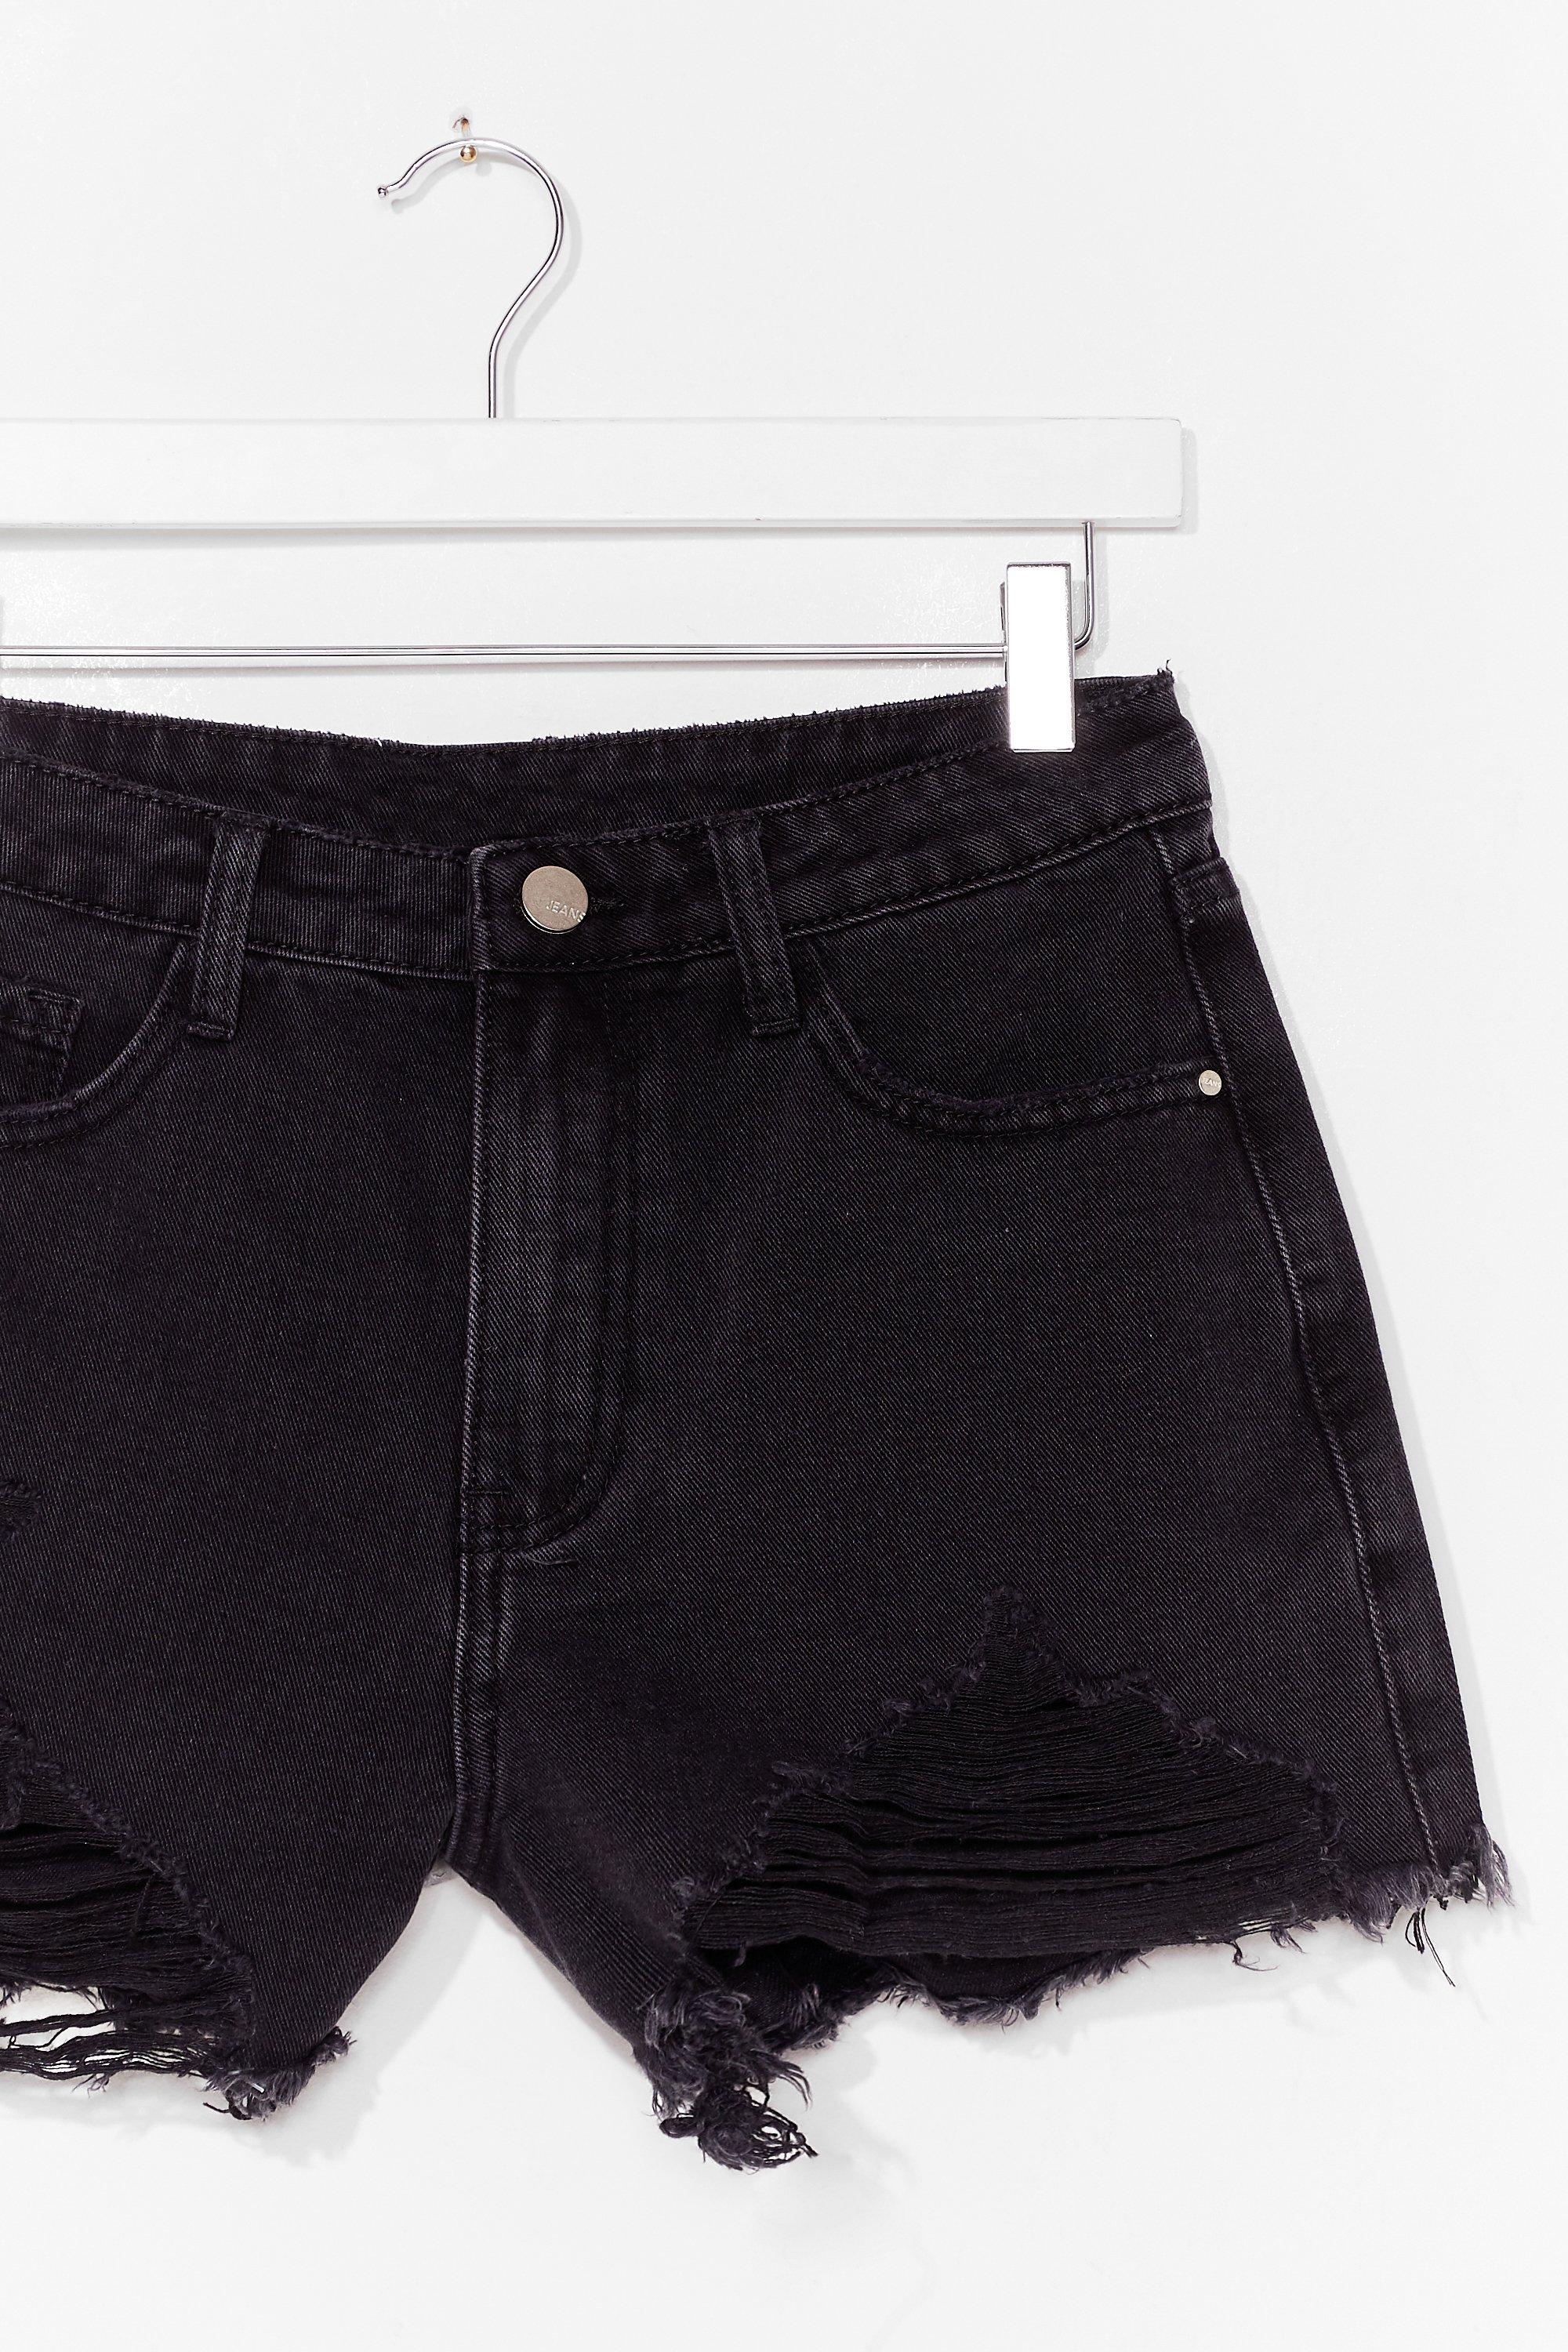 black distressed denim shorts